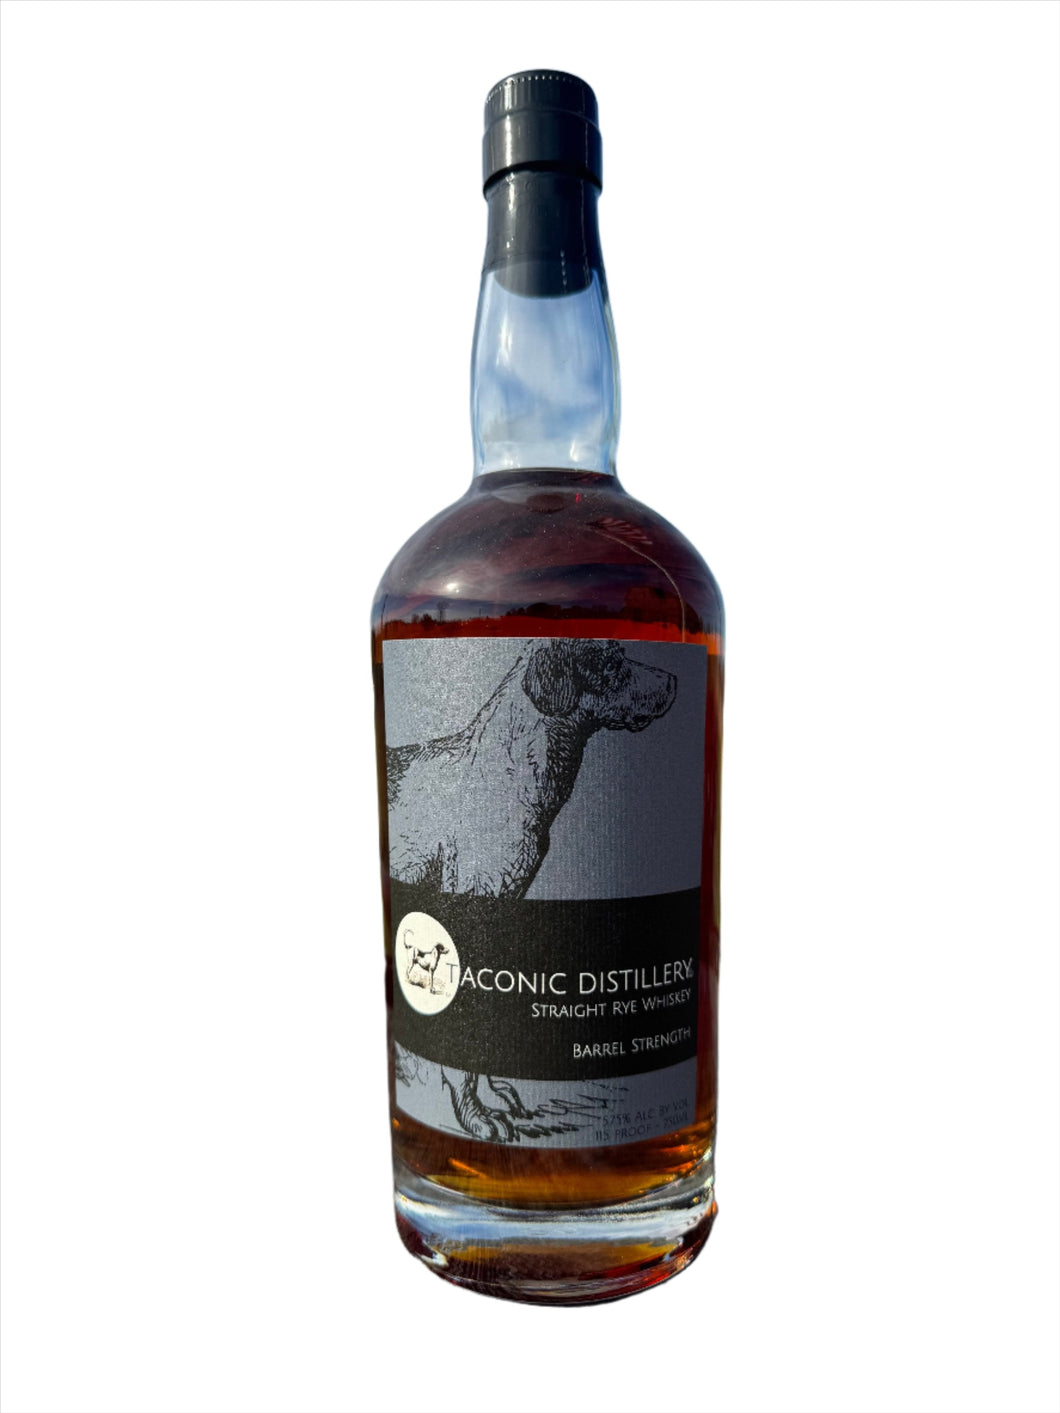 Taconic Distillery Cask Strength Straight Rye Whiskey